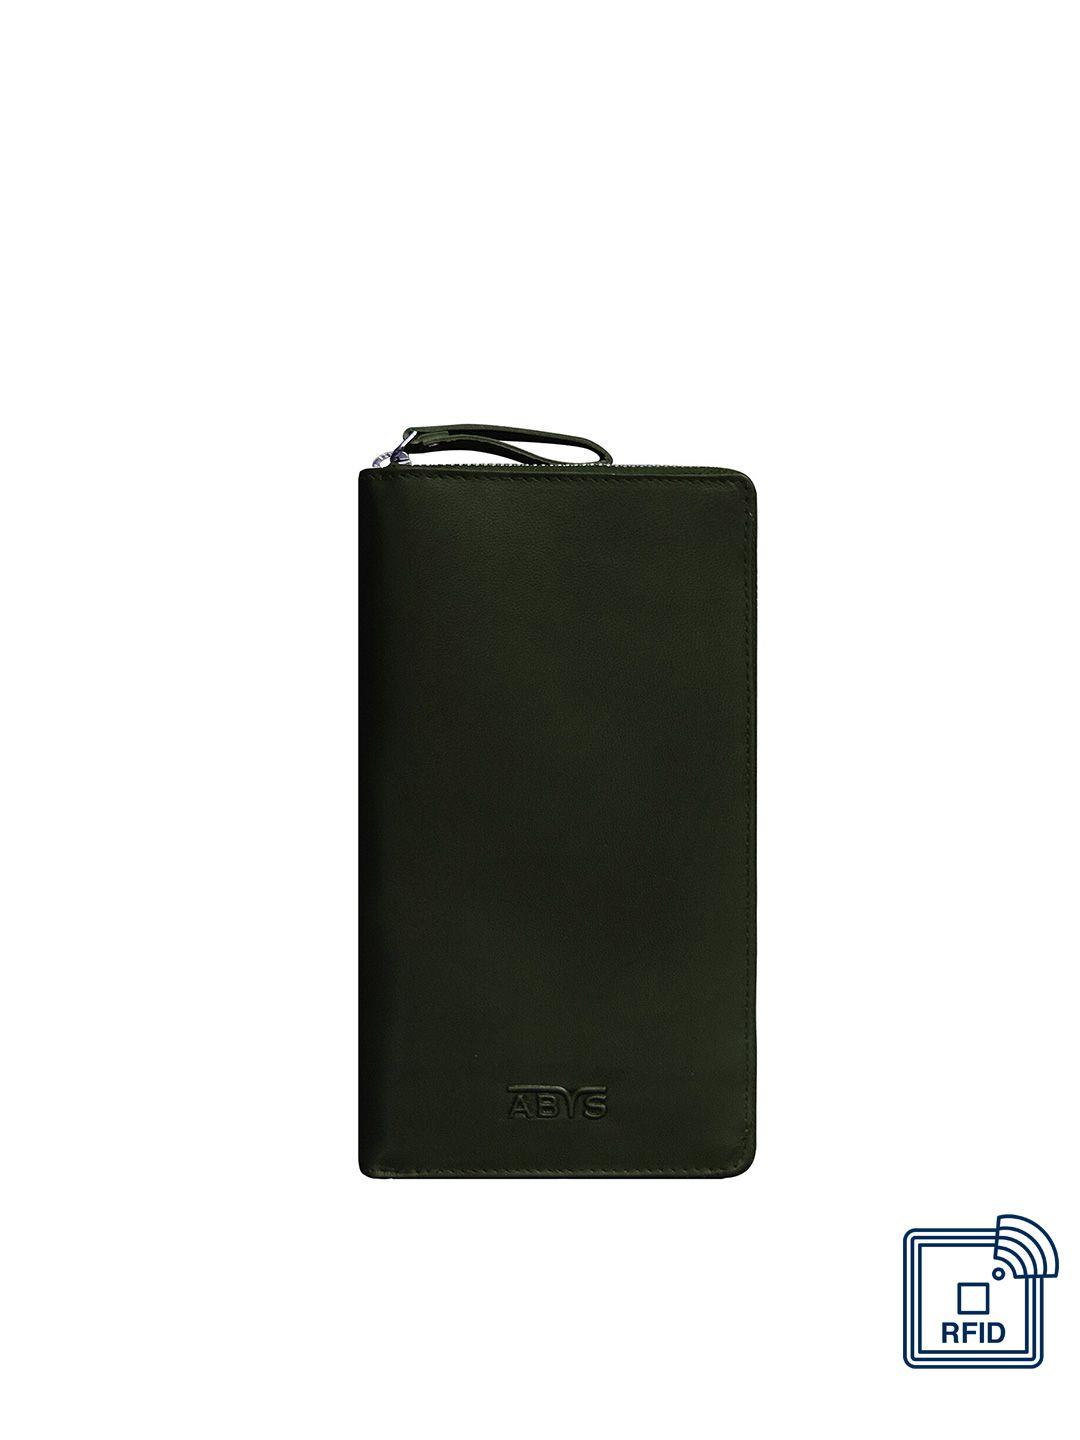 abys unisex green textured leather passport holder